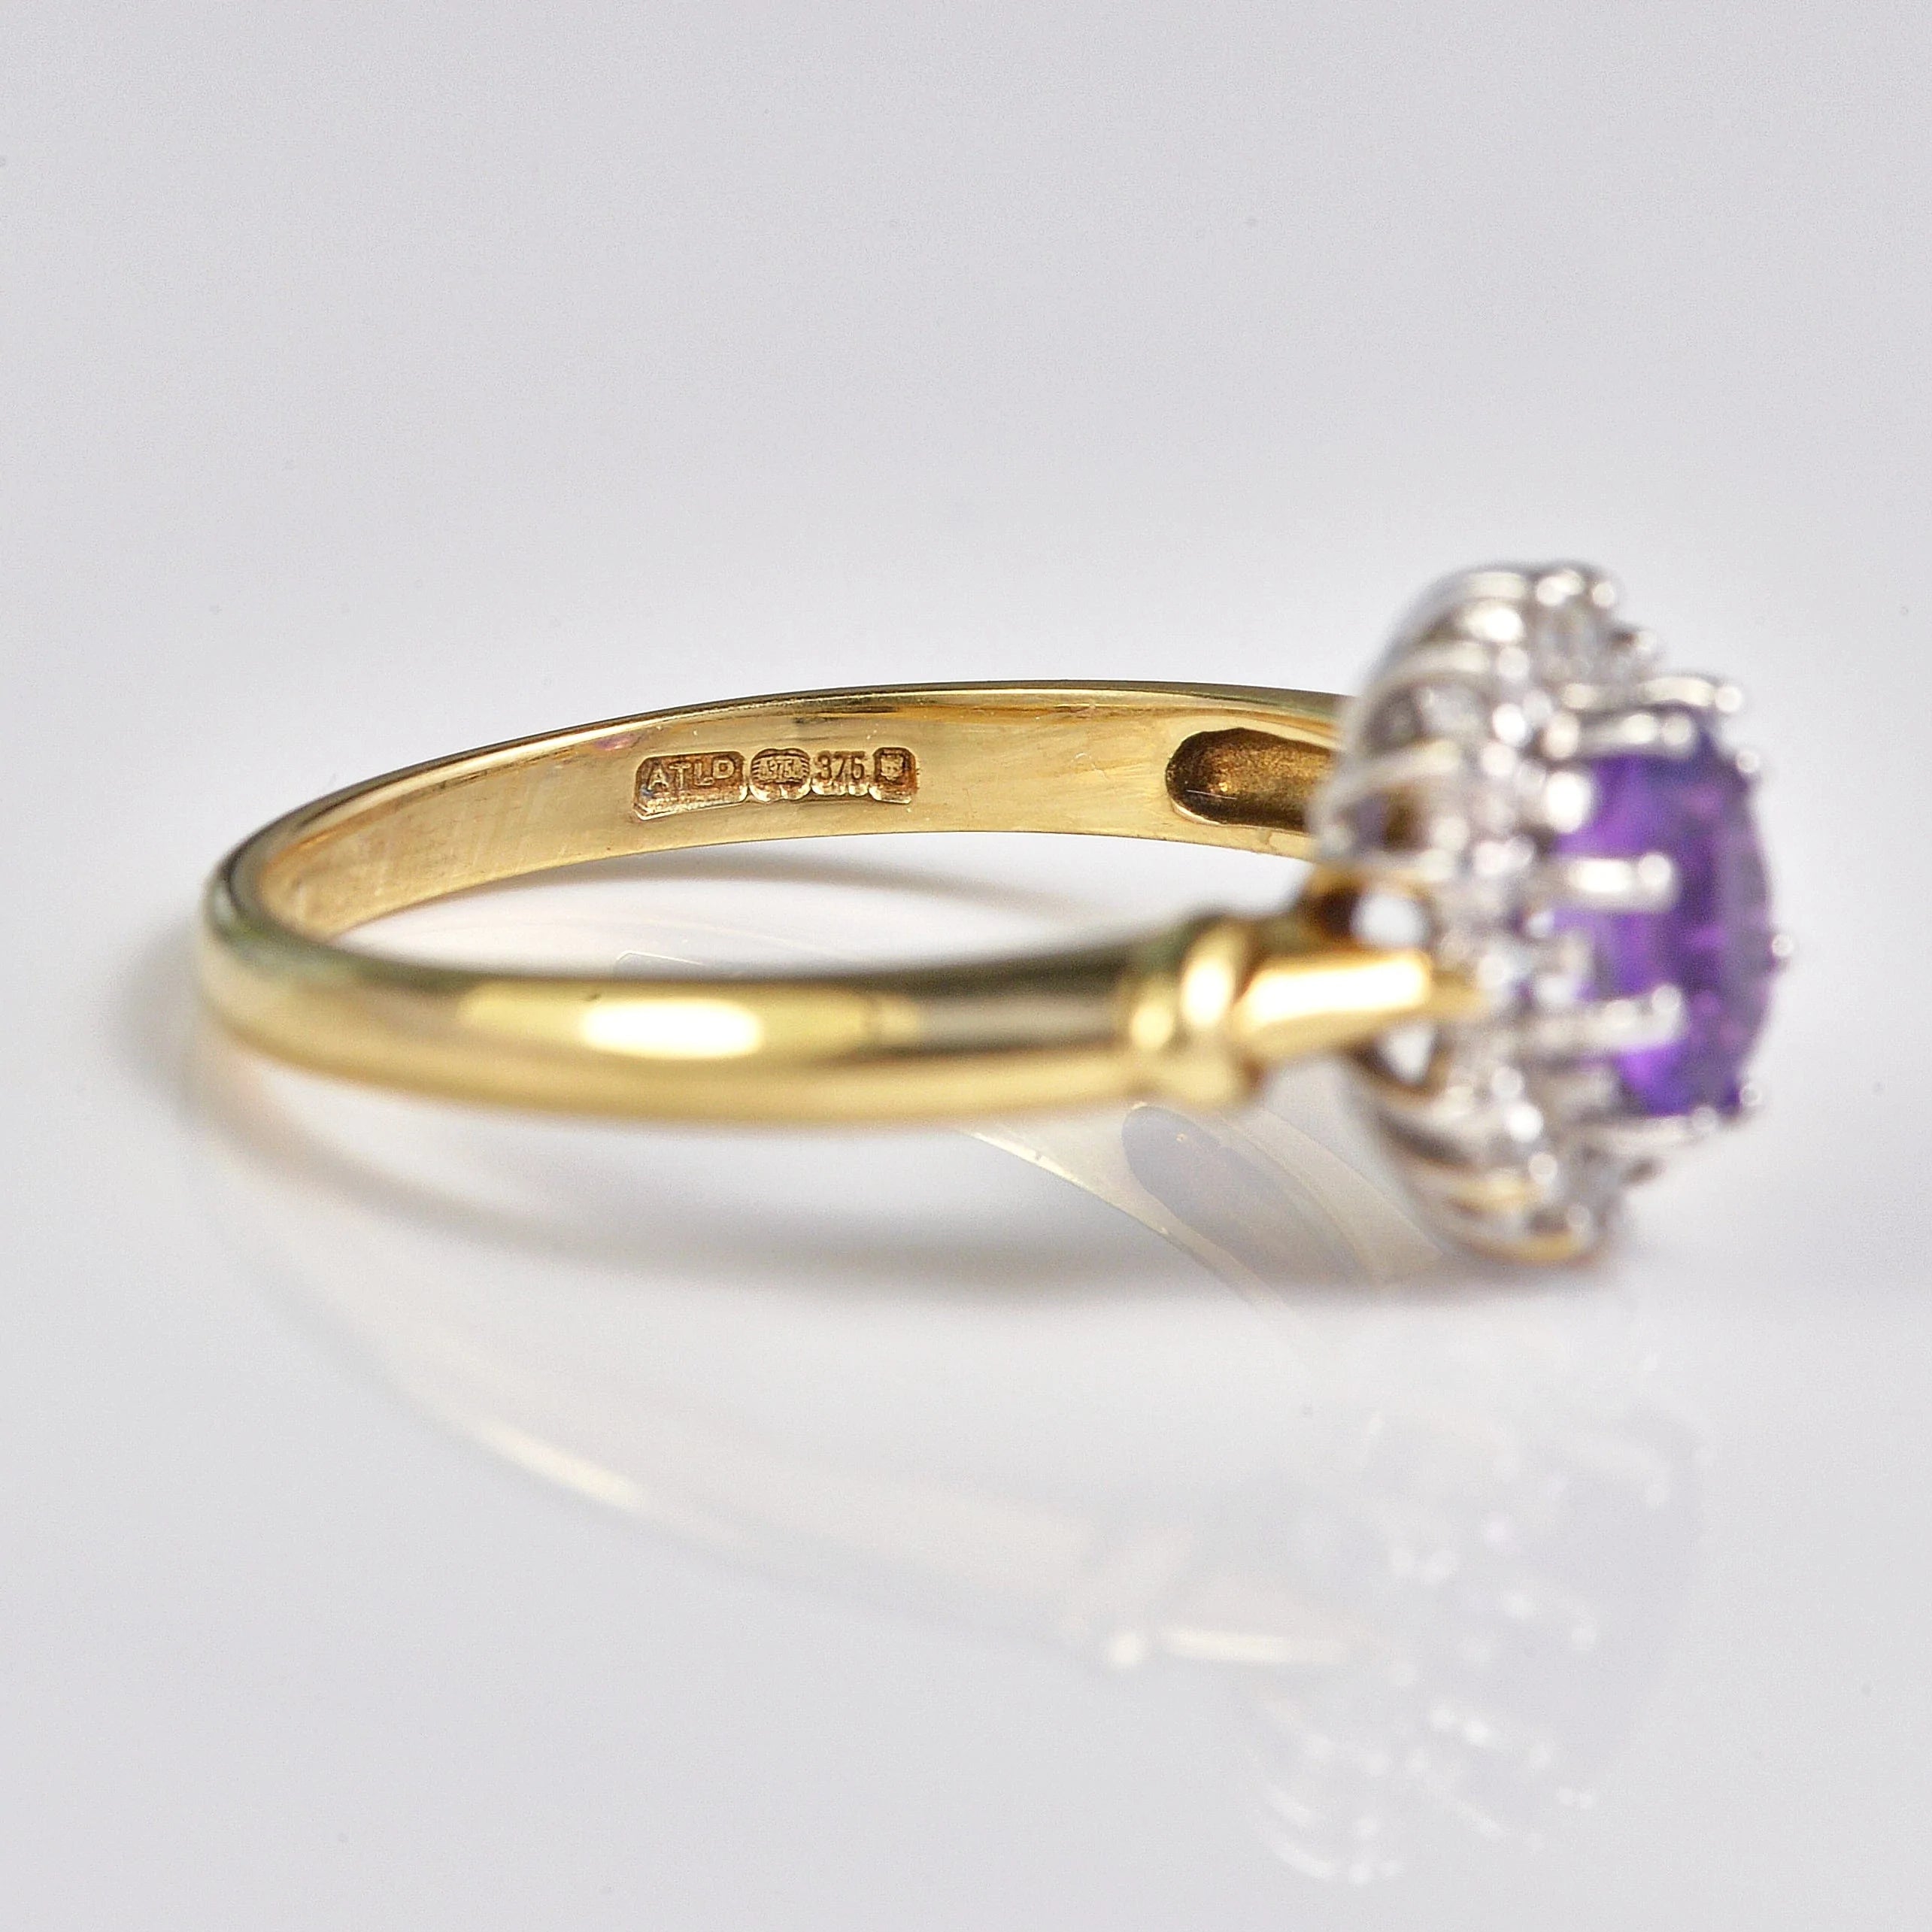 Ellibelle Jewellery Vintage Amethyst & Diamond Gold Cluster Ring